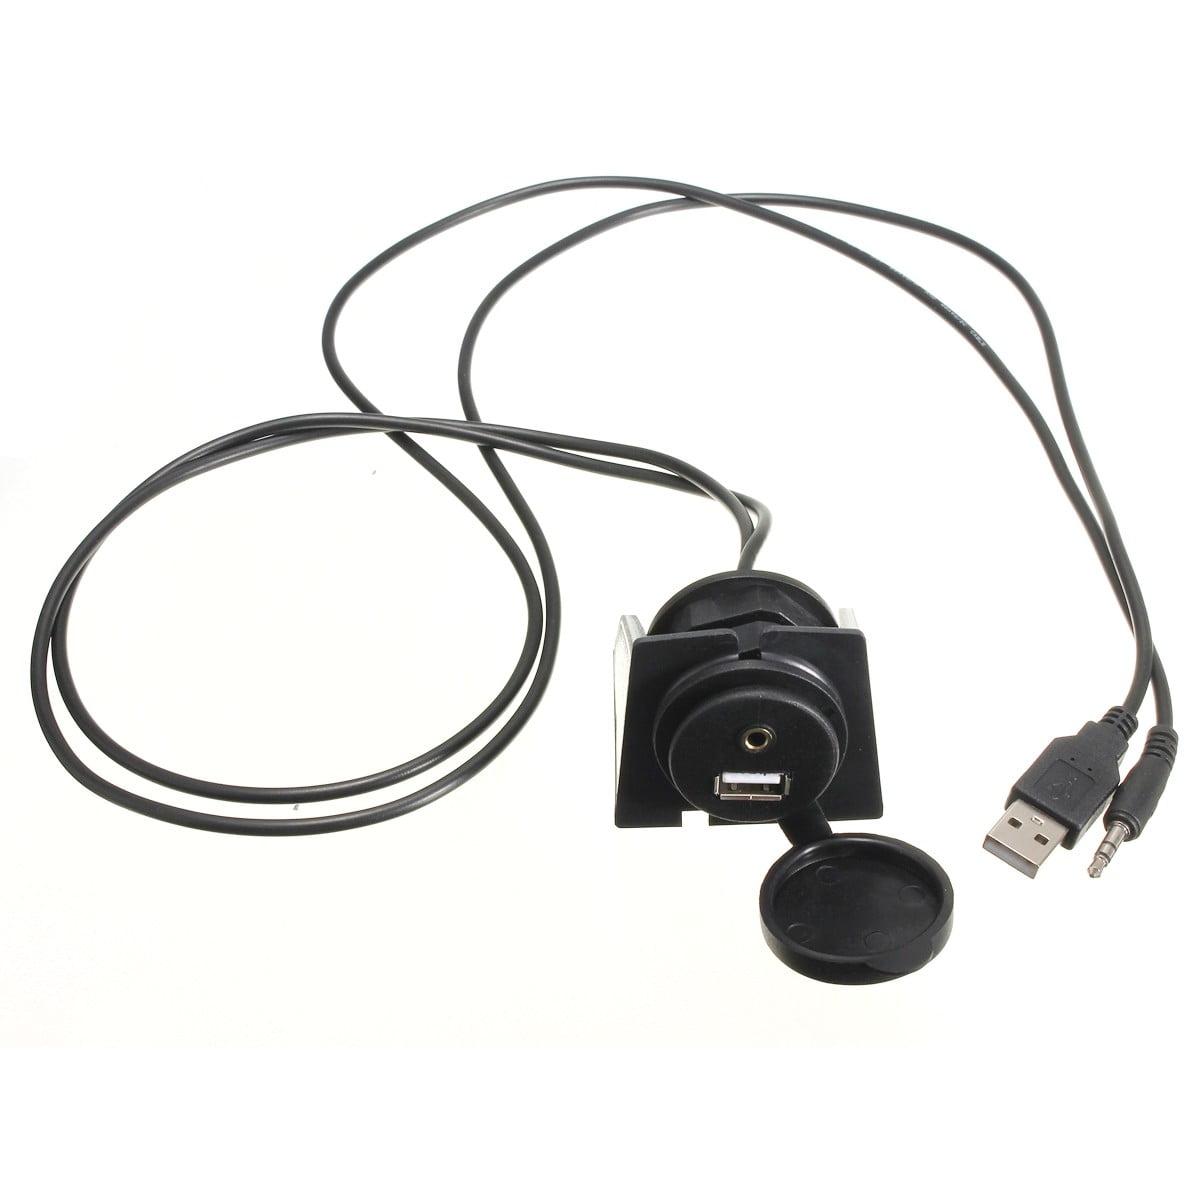 1m 3.5mm Car Dashboard Flush Mount USB 2.0 AUX Socket Extension Lead Panel Cable